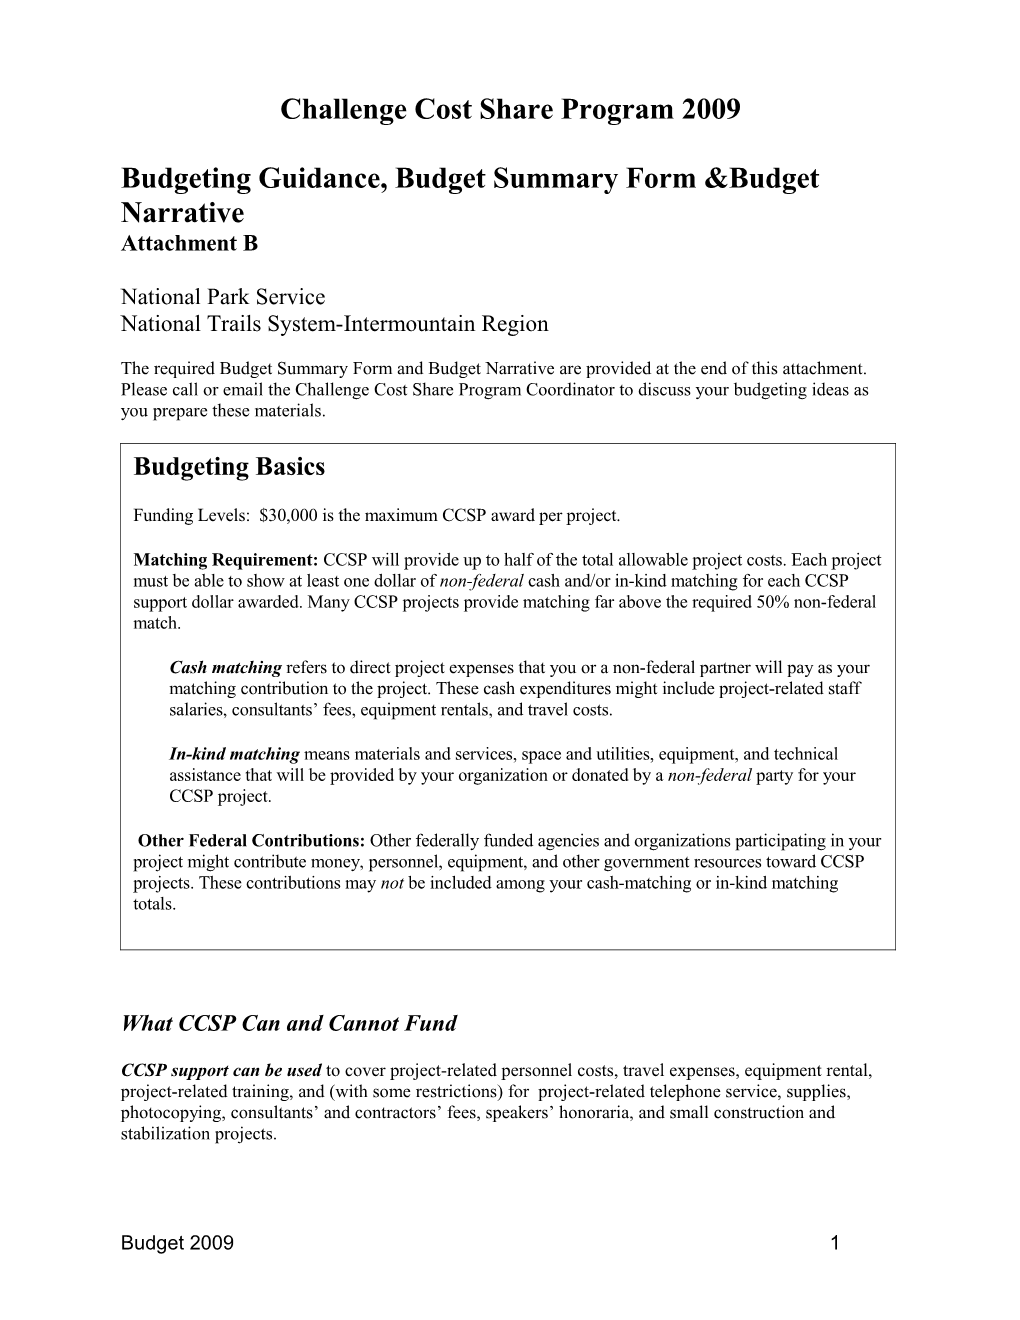 Challenge Cost Share Program 2008